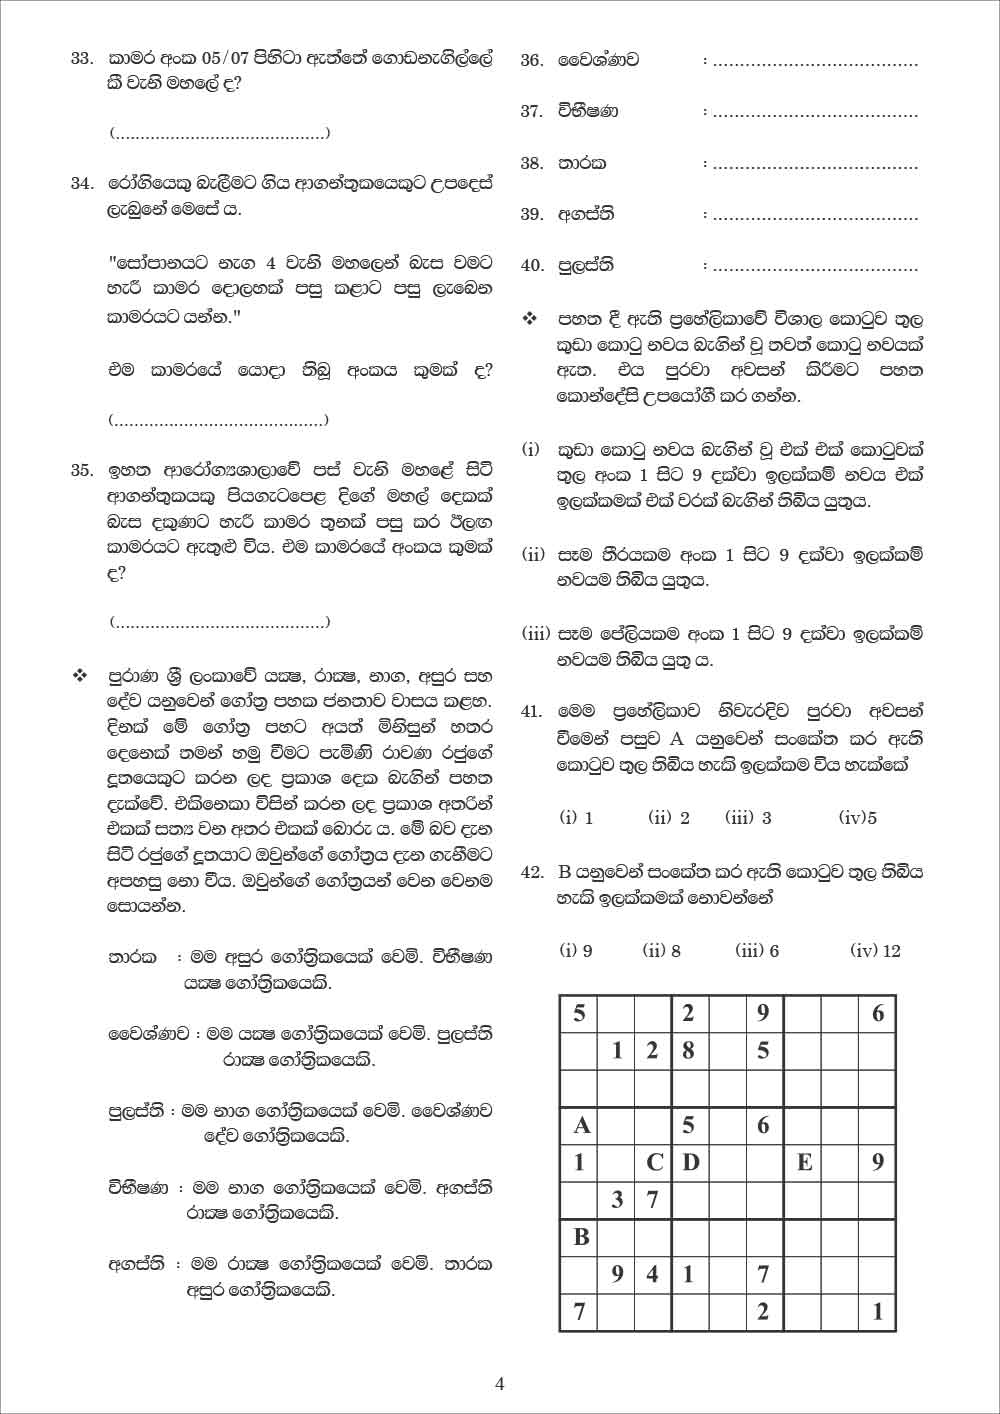 SLAS Pass Paper 03 by Anusha Gokula - General Knowledge in Sinhala